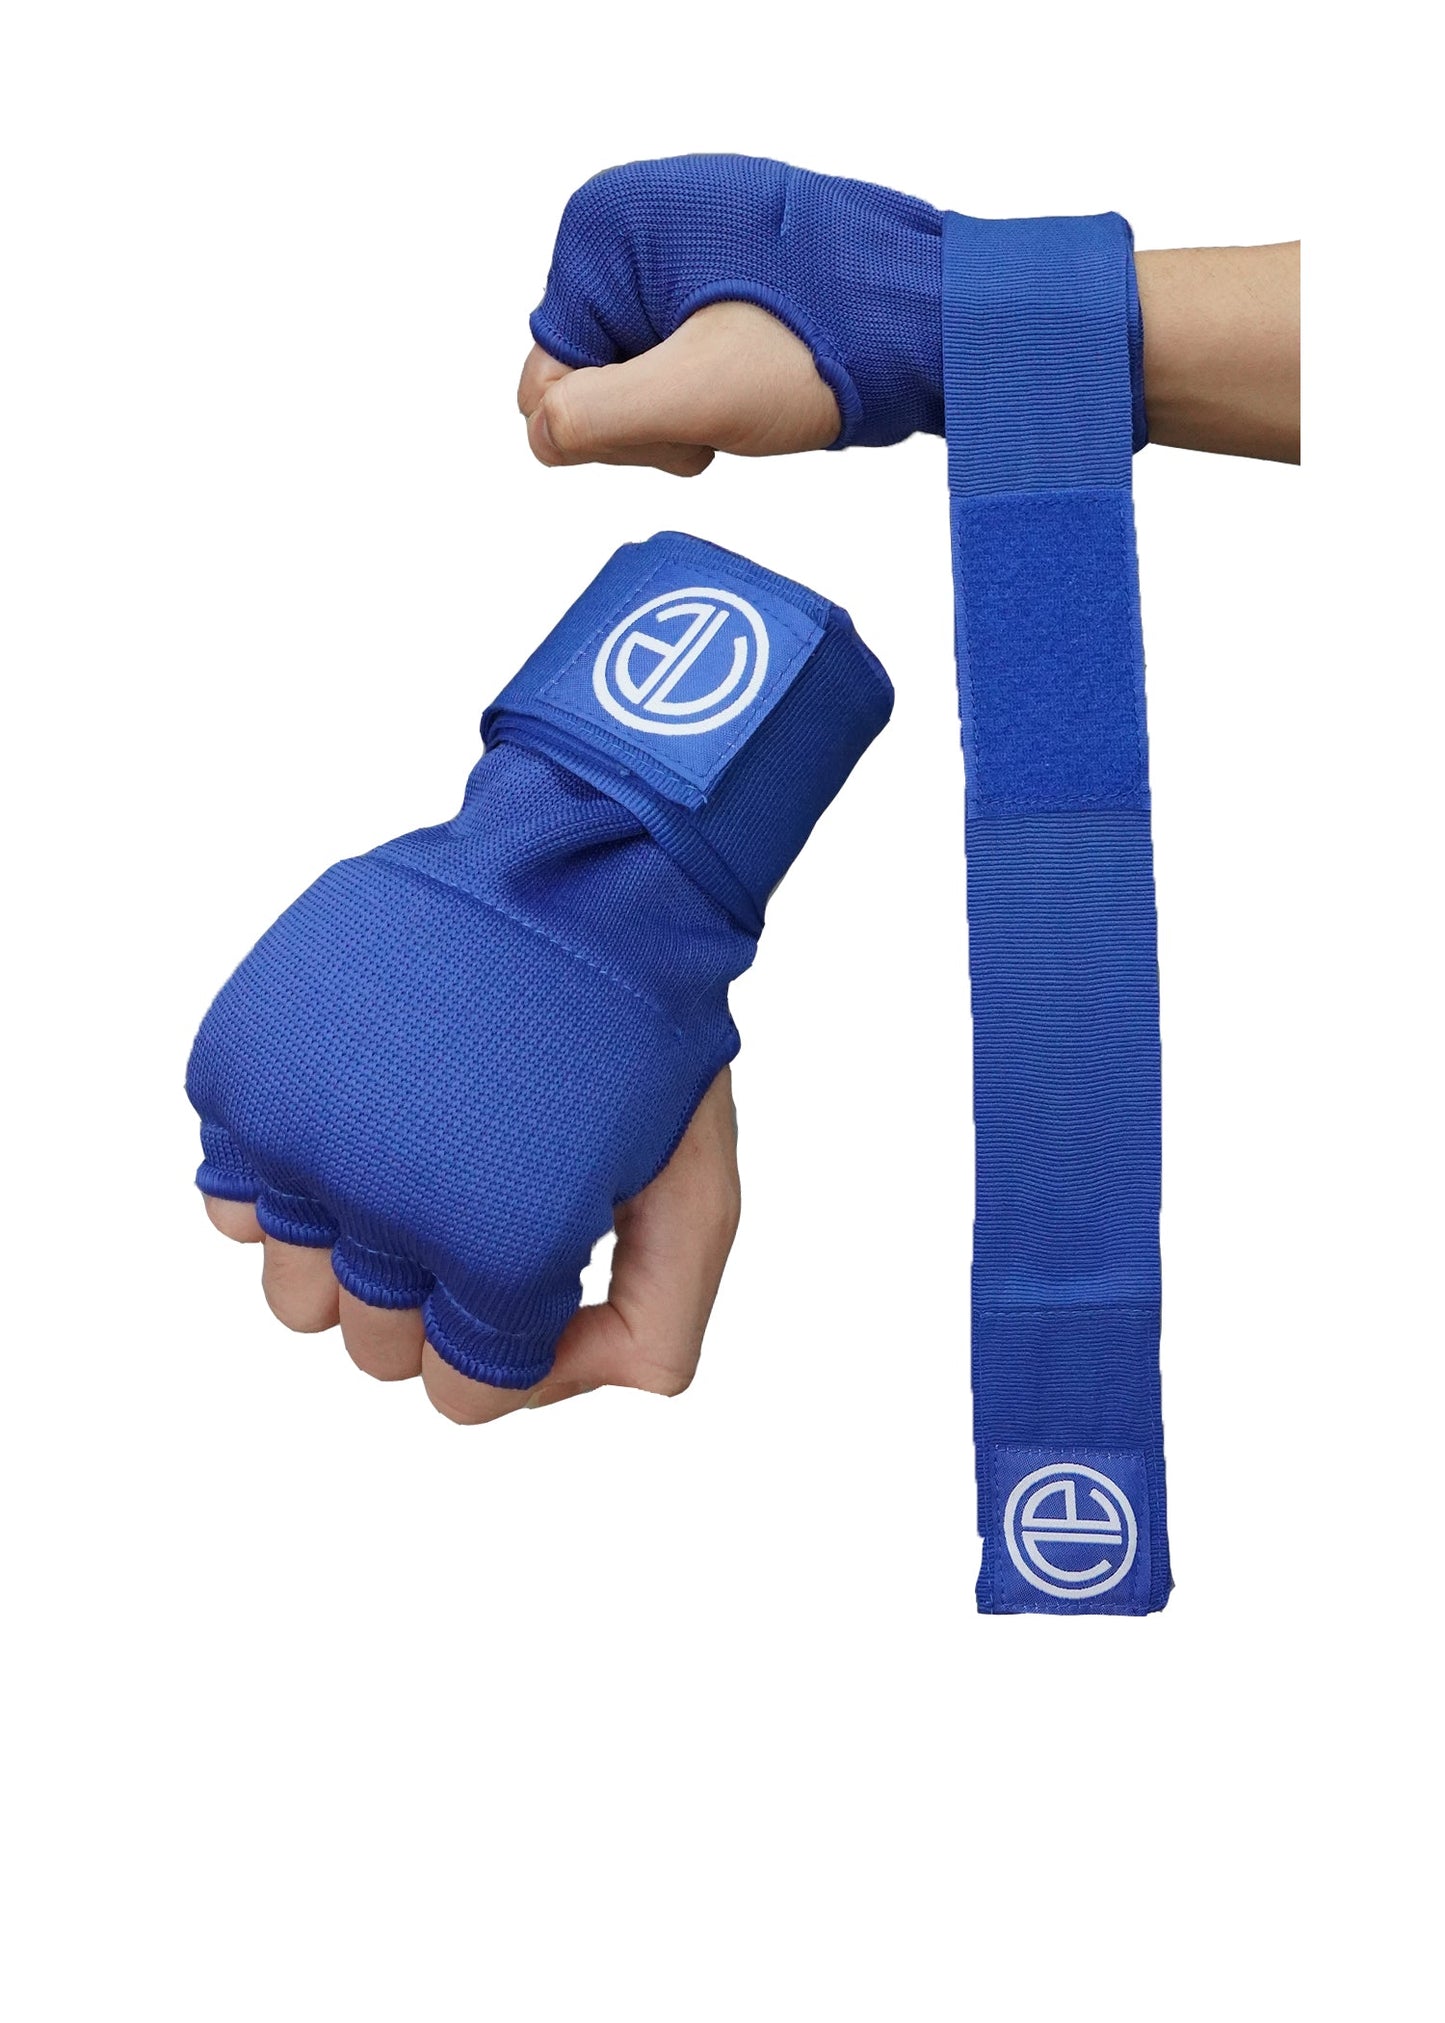 OA Gel Inner Glove with Wrap - Blue